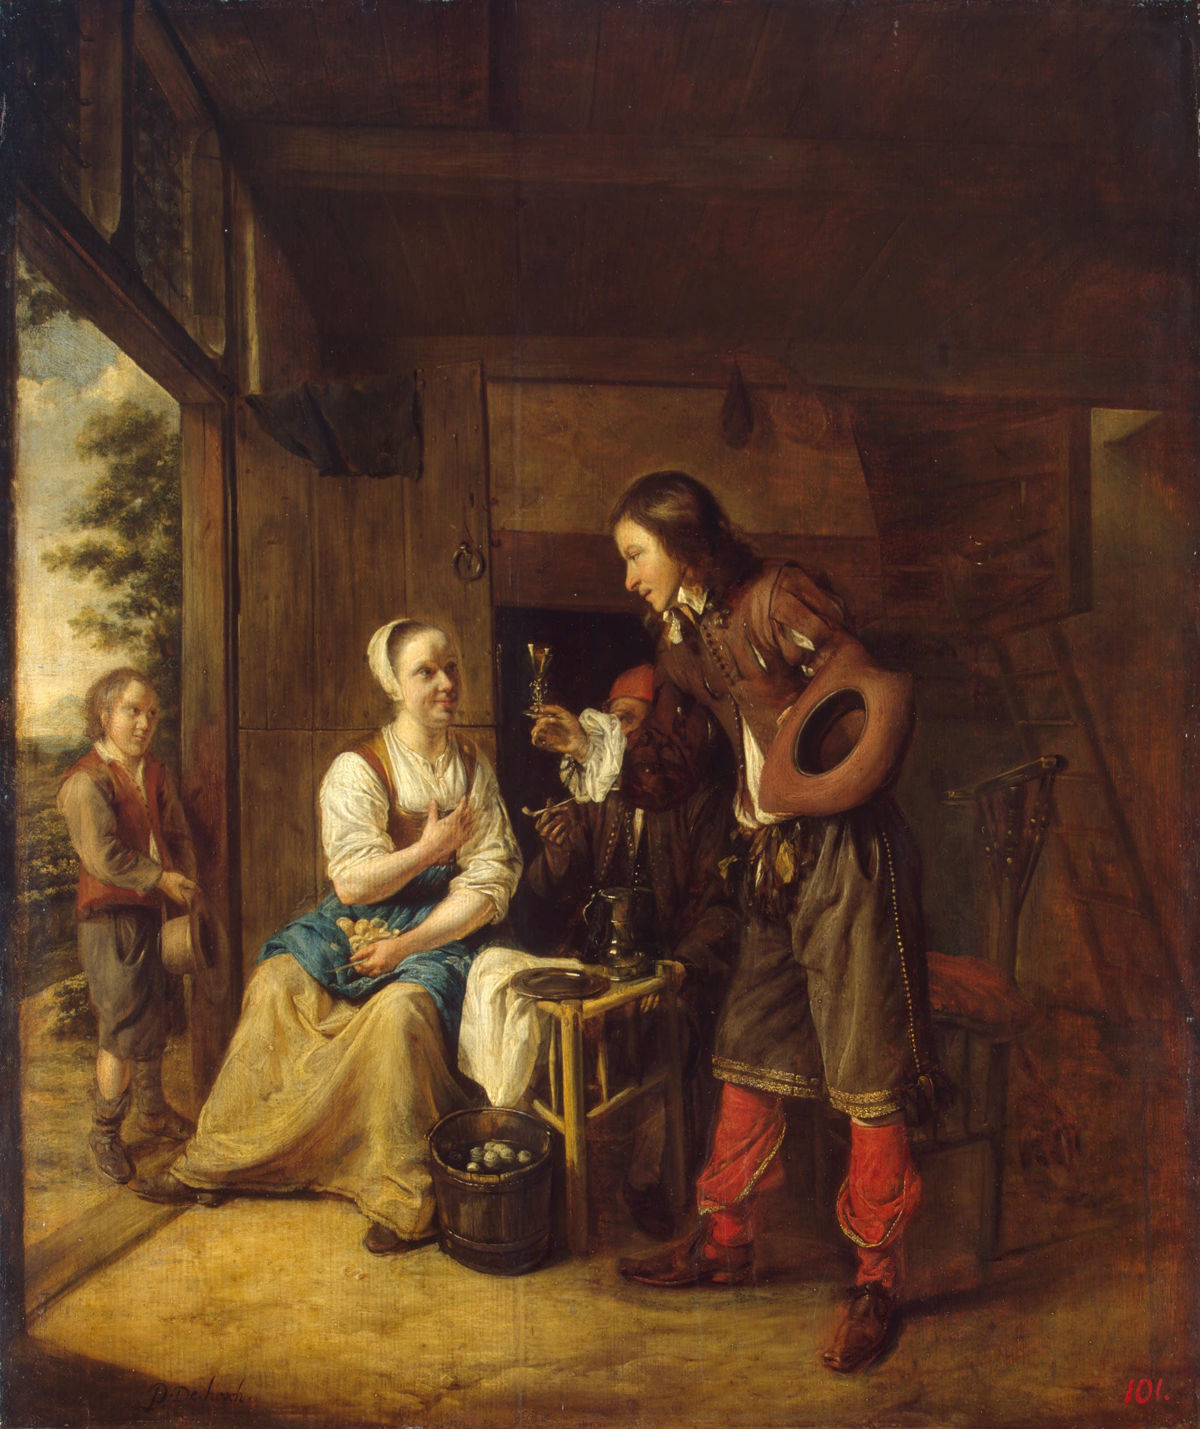 A Man Offering a Glass of Wine to a Woman by Pieter de Hooch